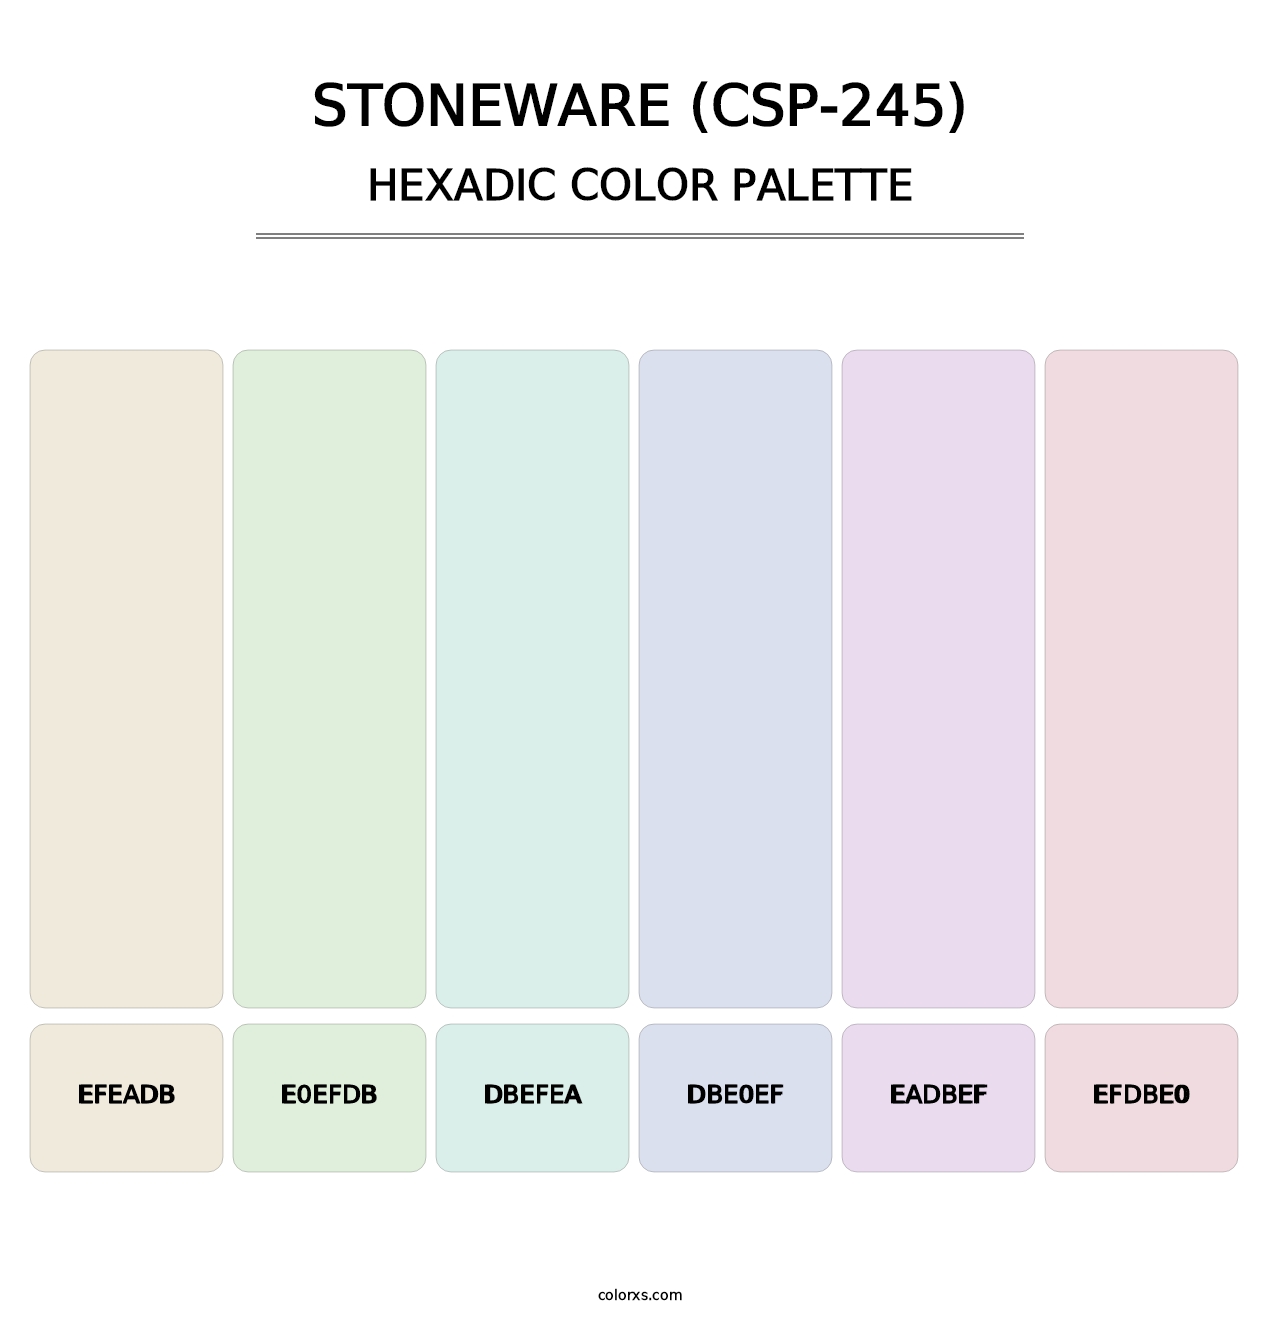 Stoneware (CSP-245) - Hexadic Color Palette